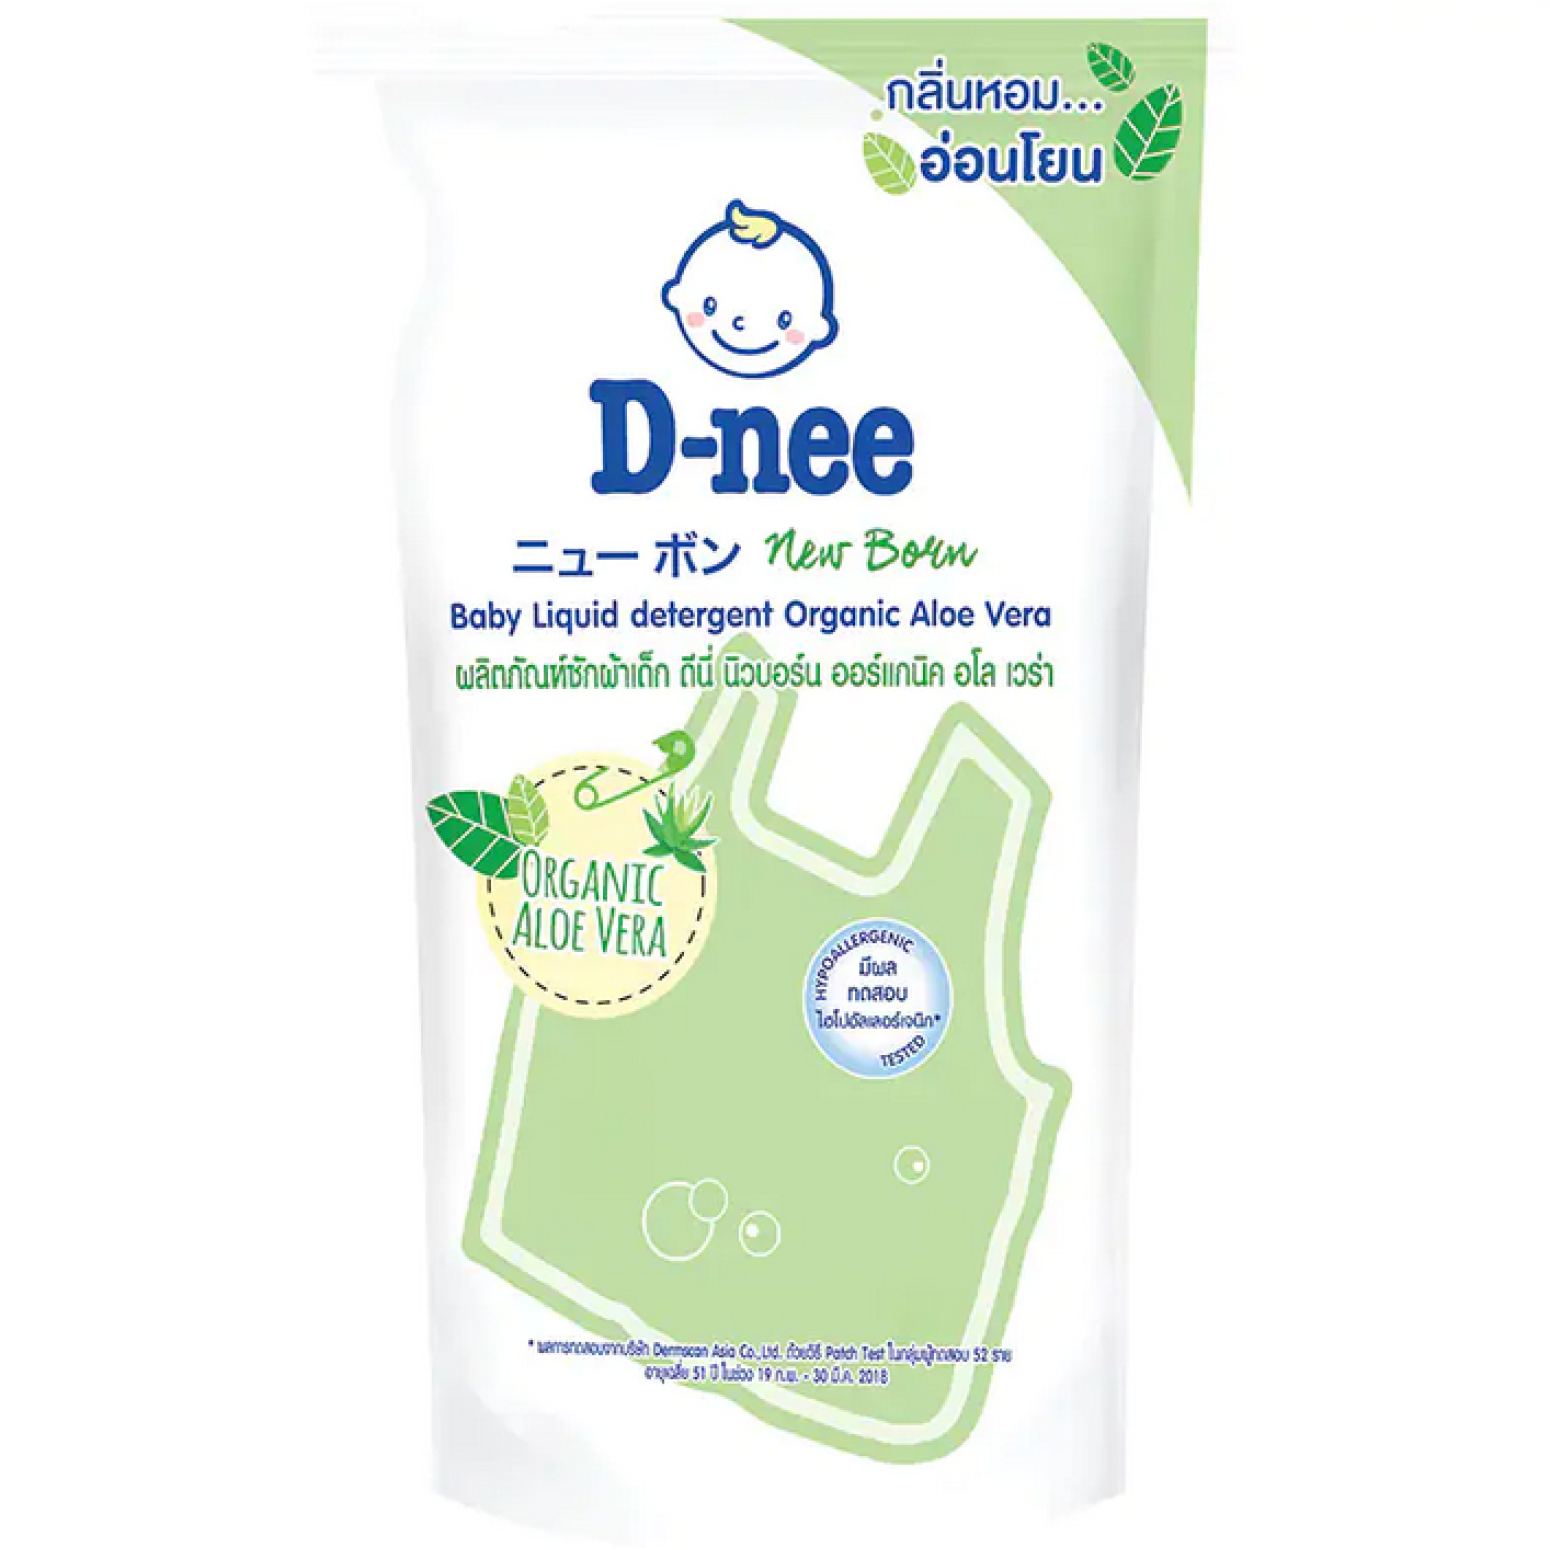 D-nee Liquid Baby Detergent Organic Aloe Vera